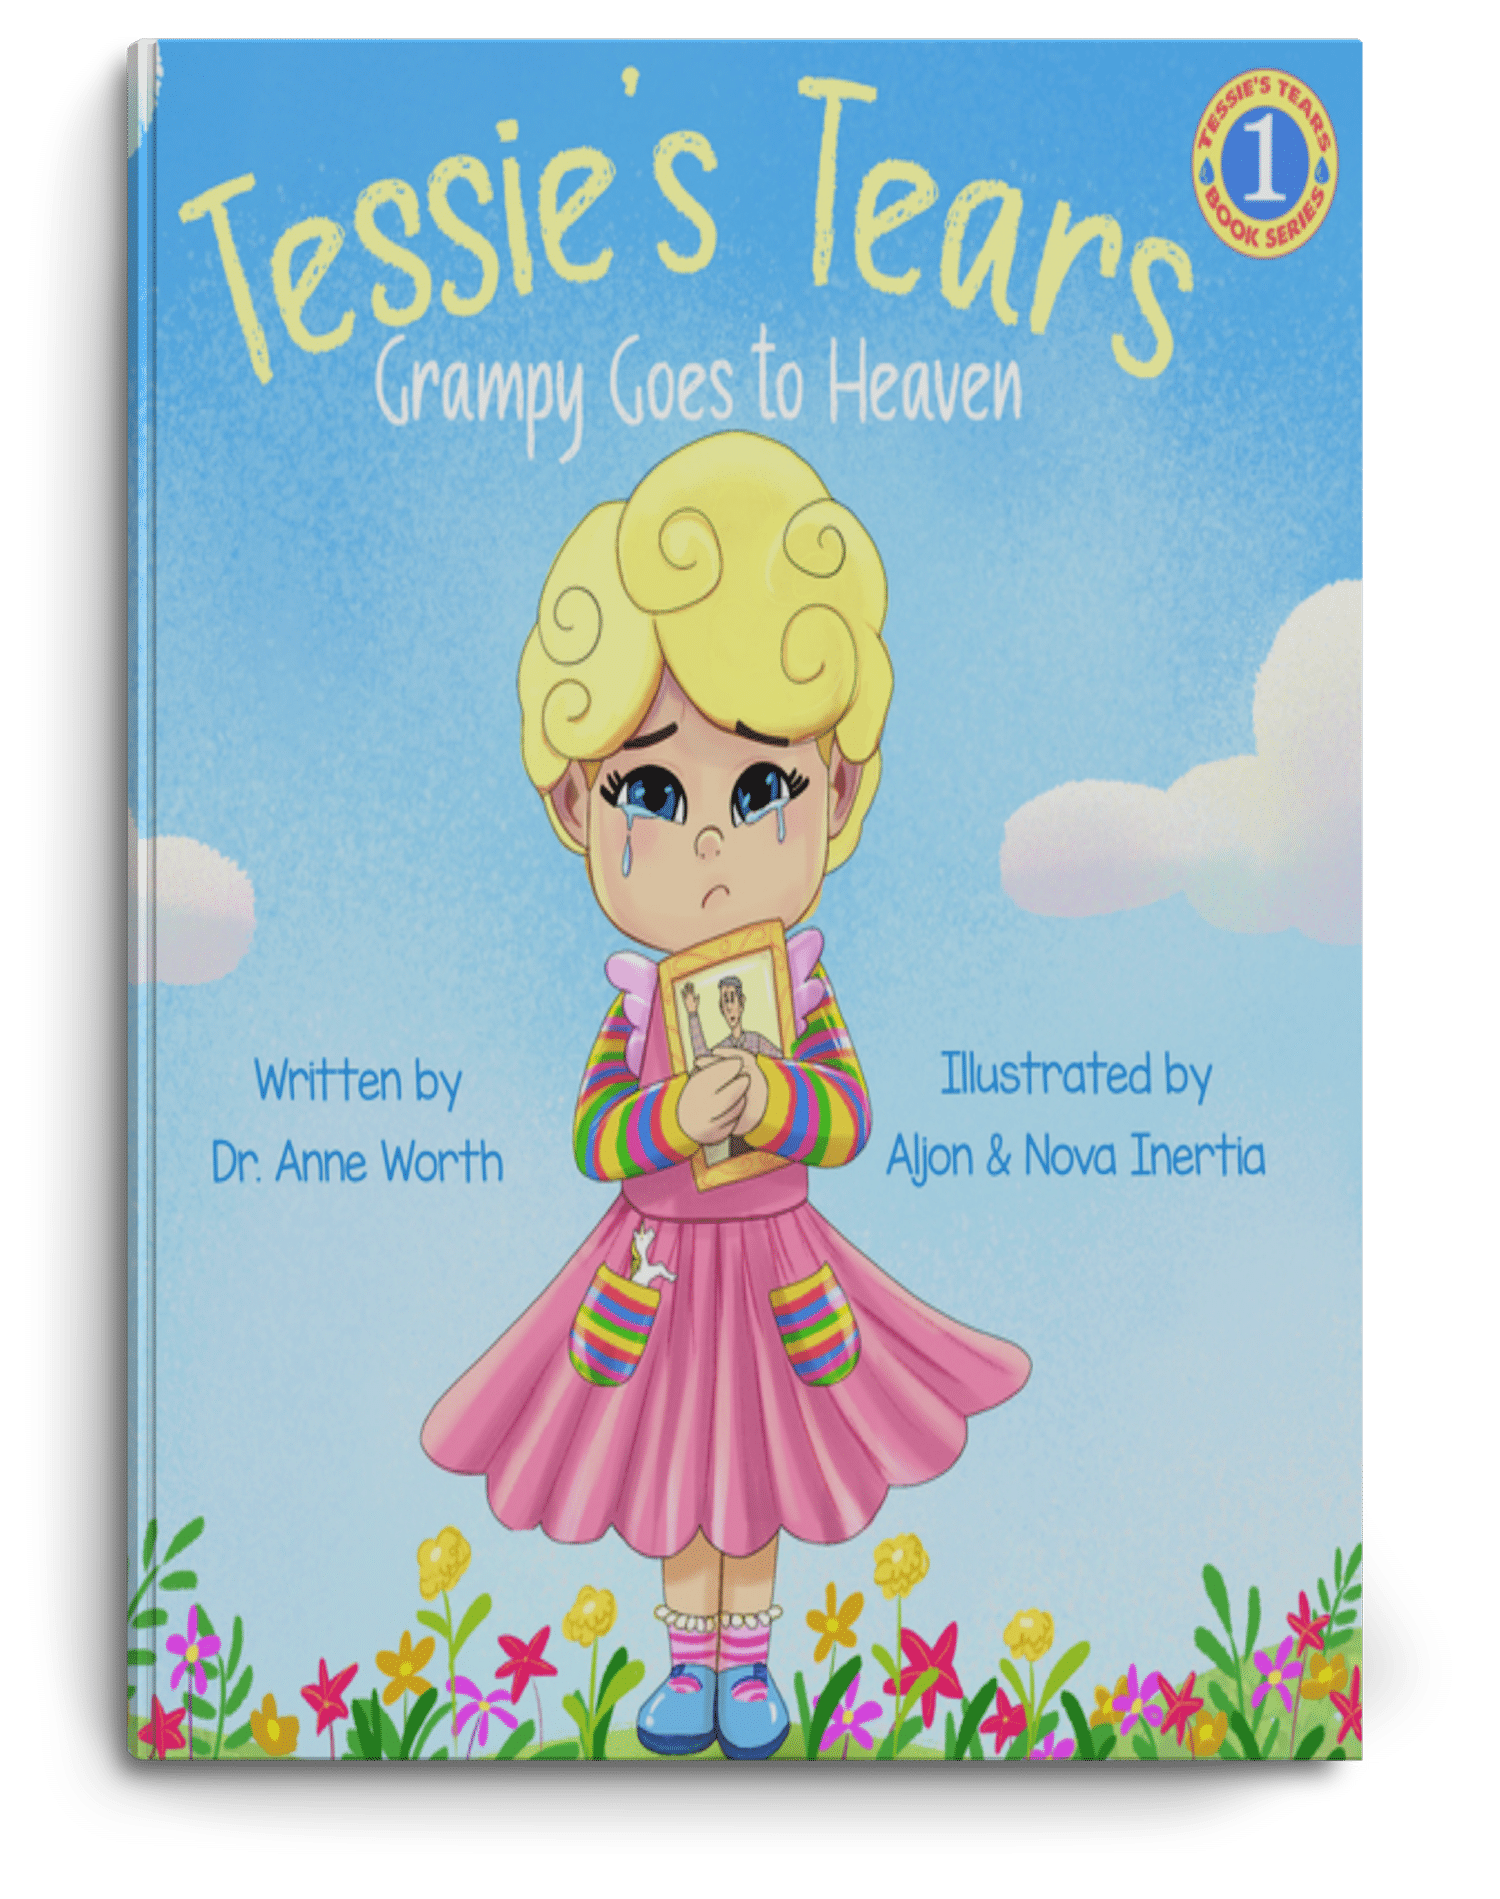 Tessie’s Tears: Grampy Goes to Heaven